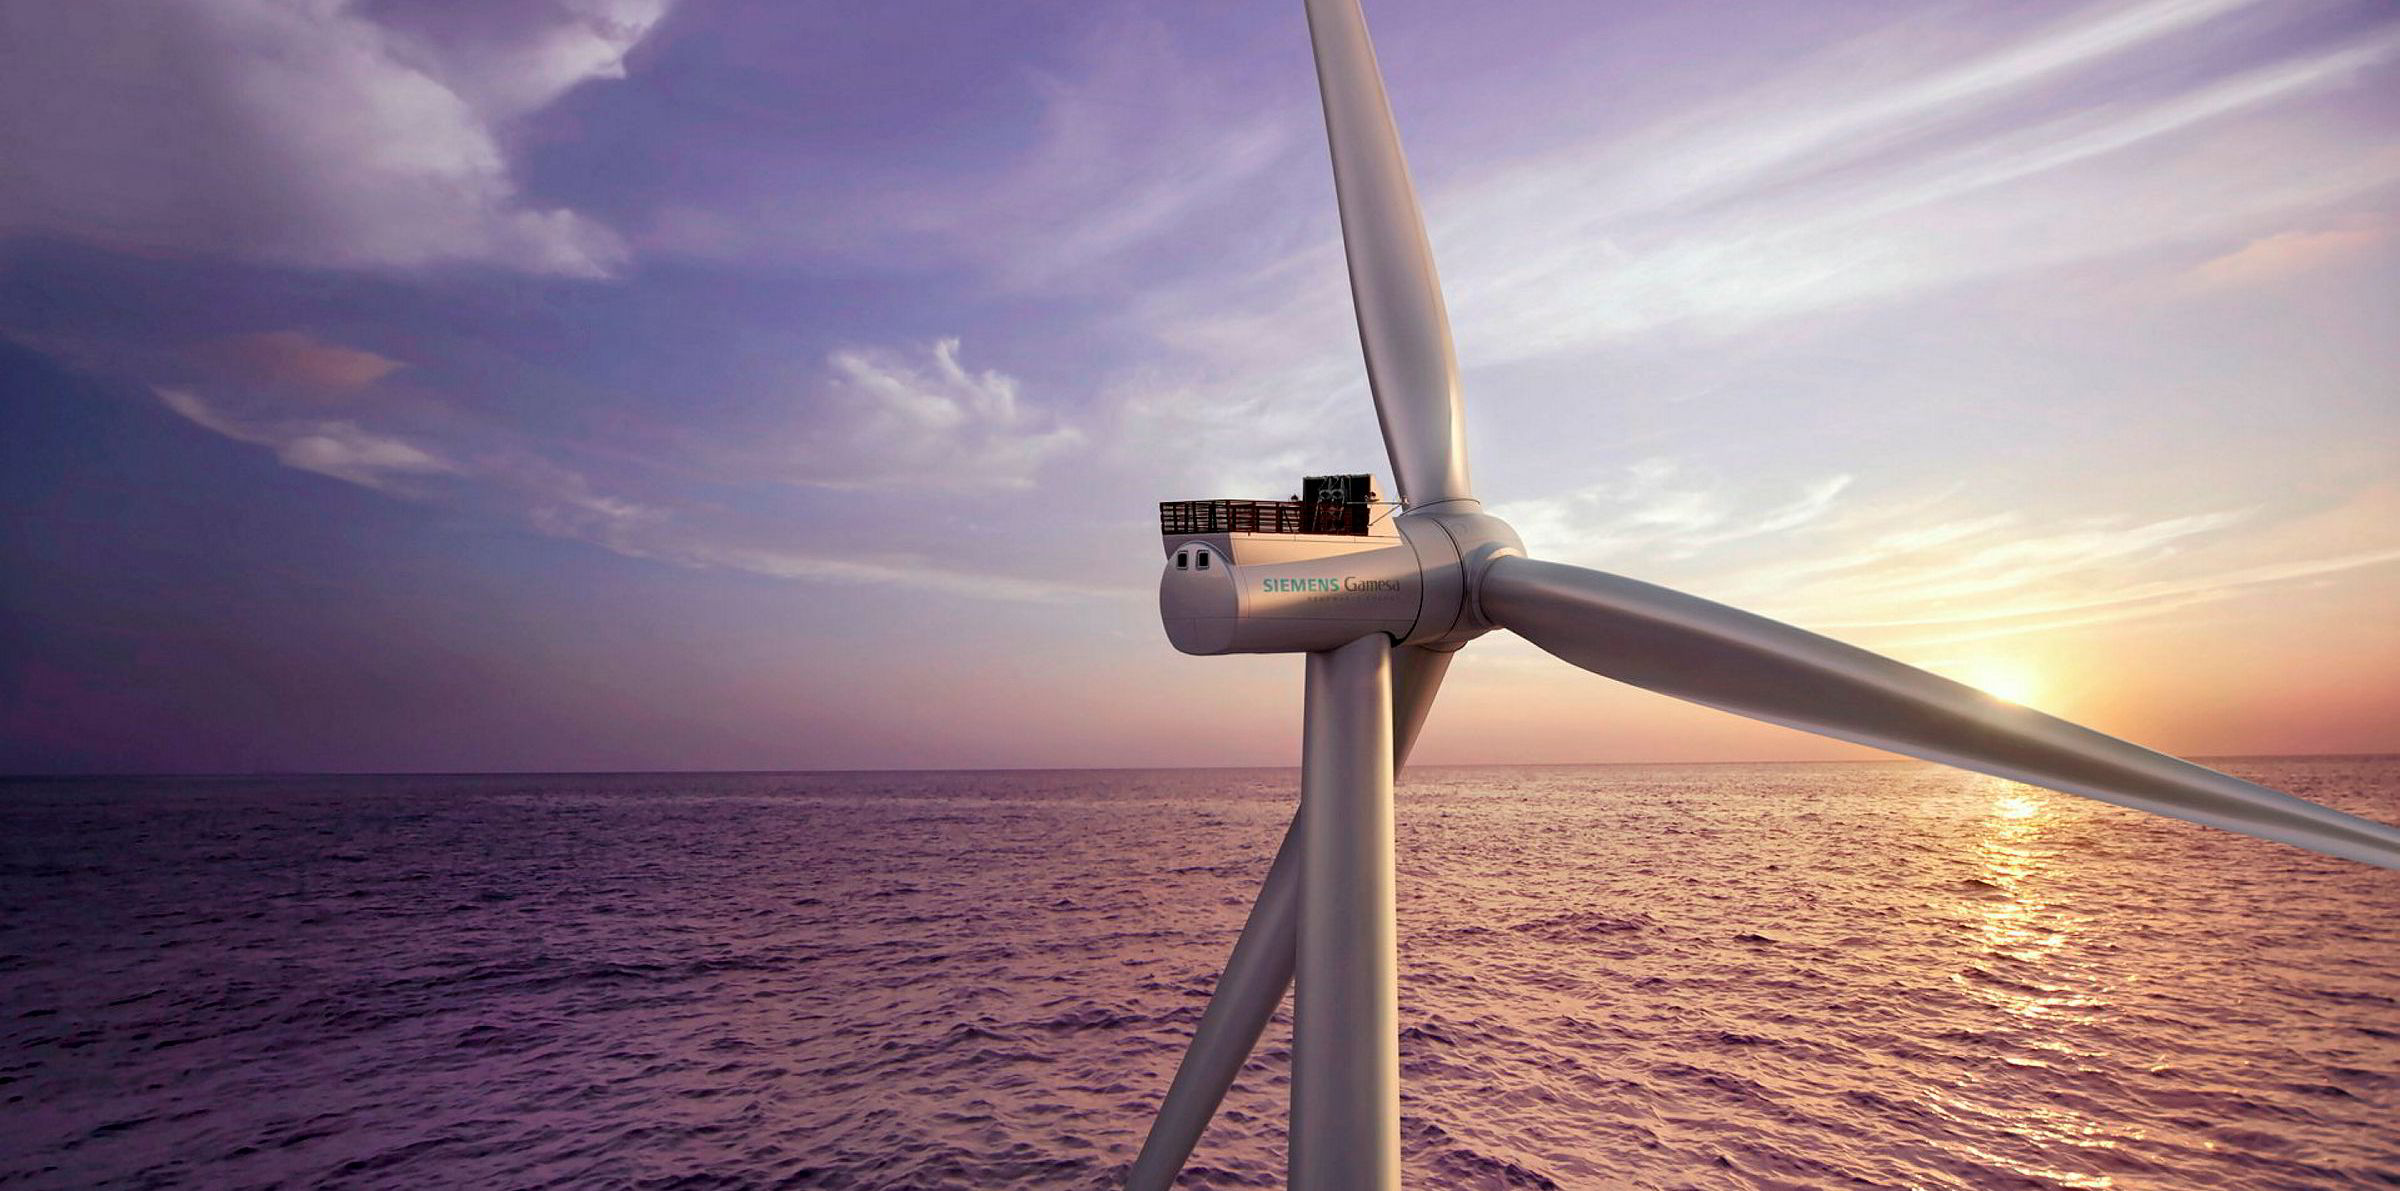 Siemens Gamesa 8MW offshore wind turbine 'ready for market' | Recharge